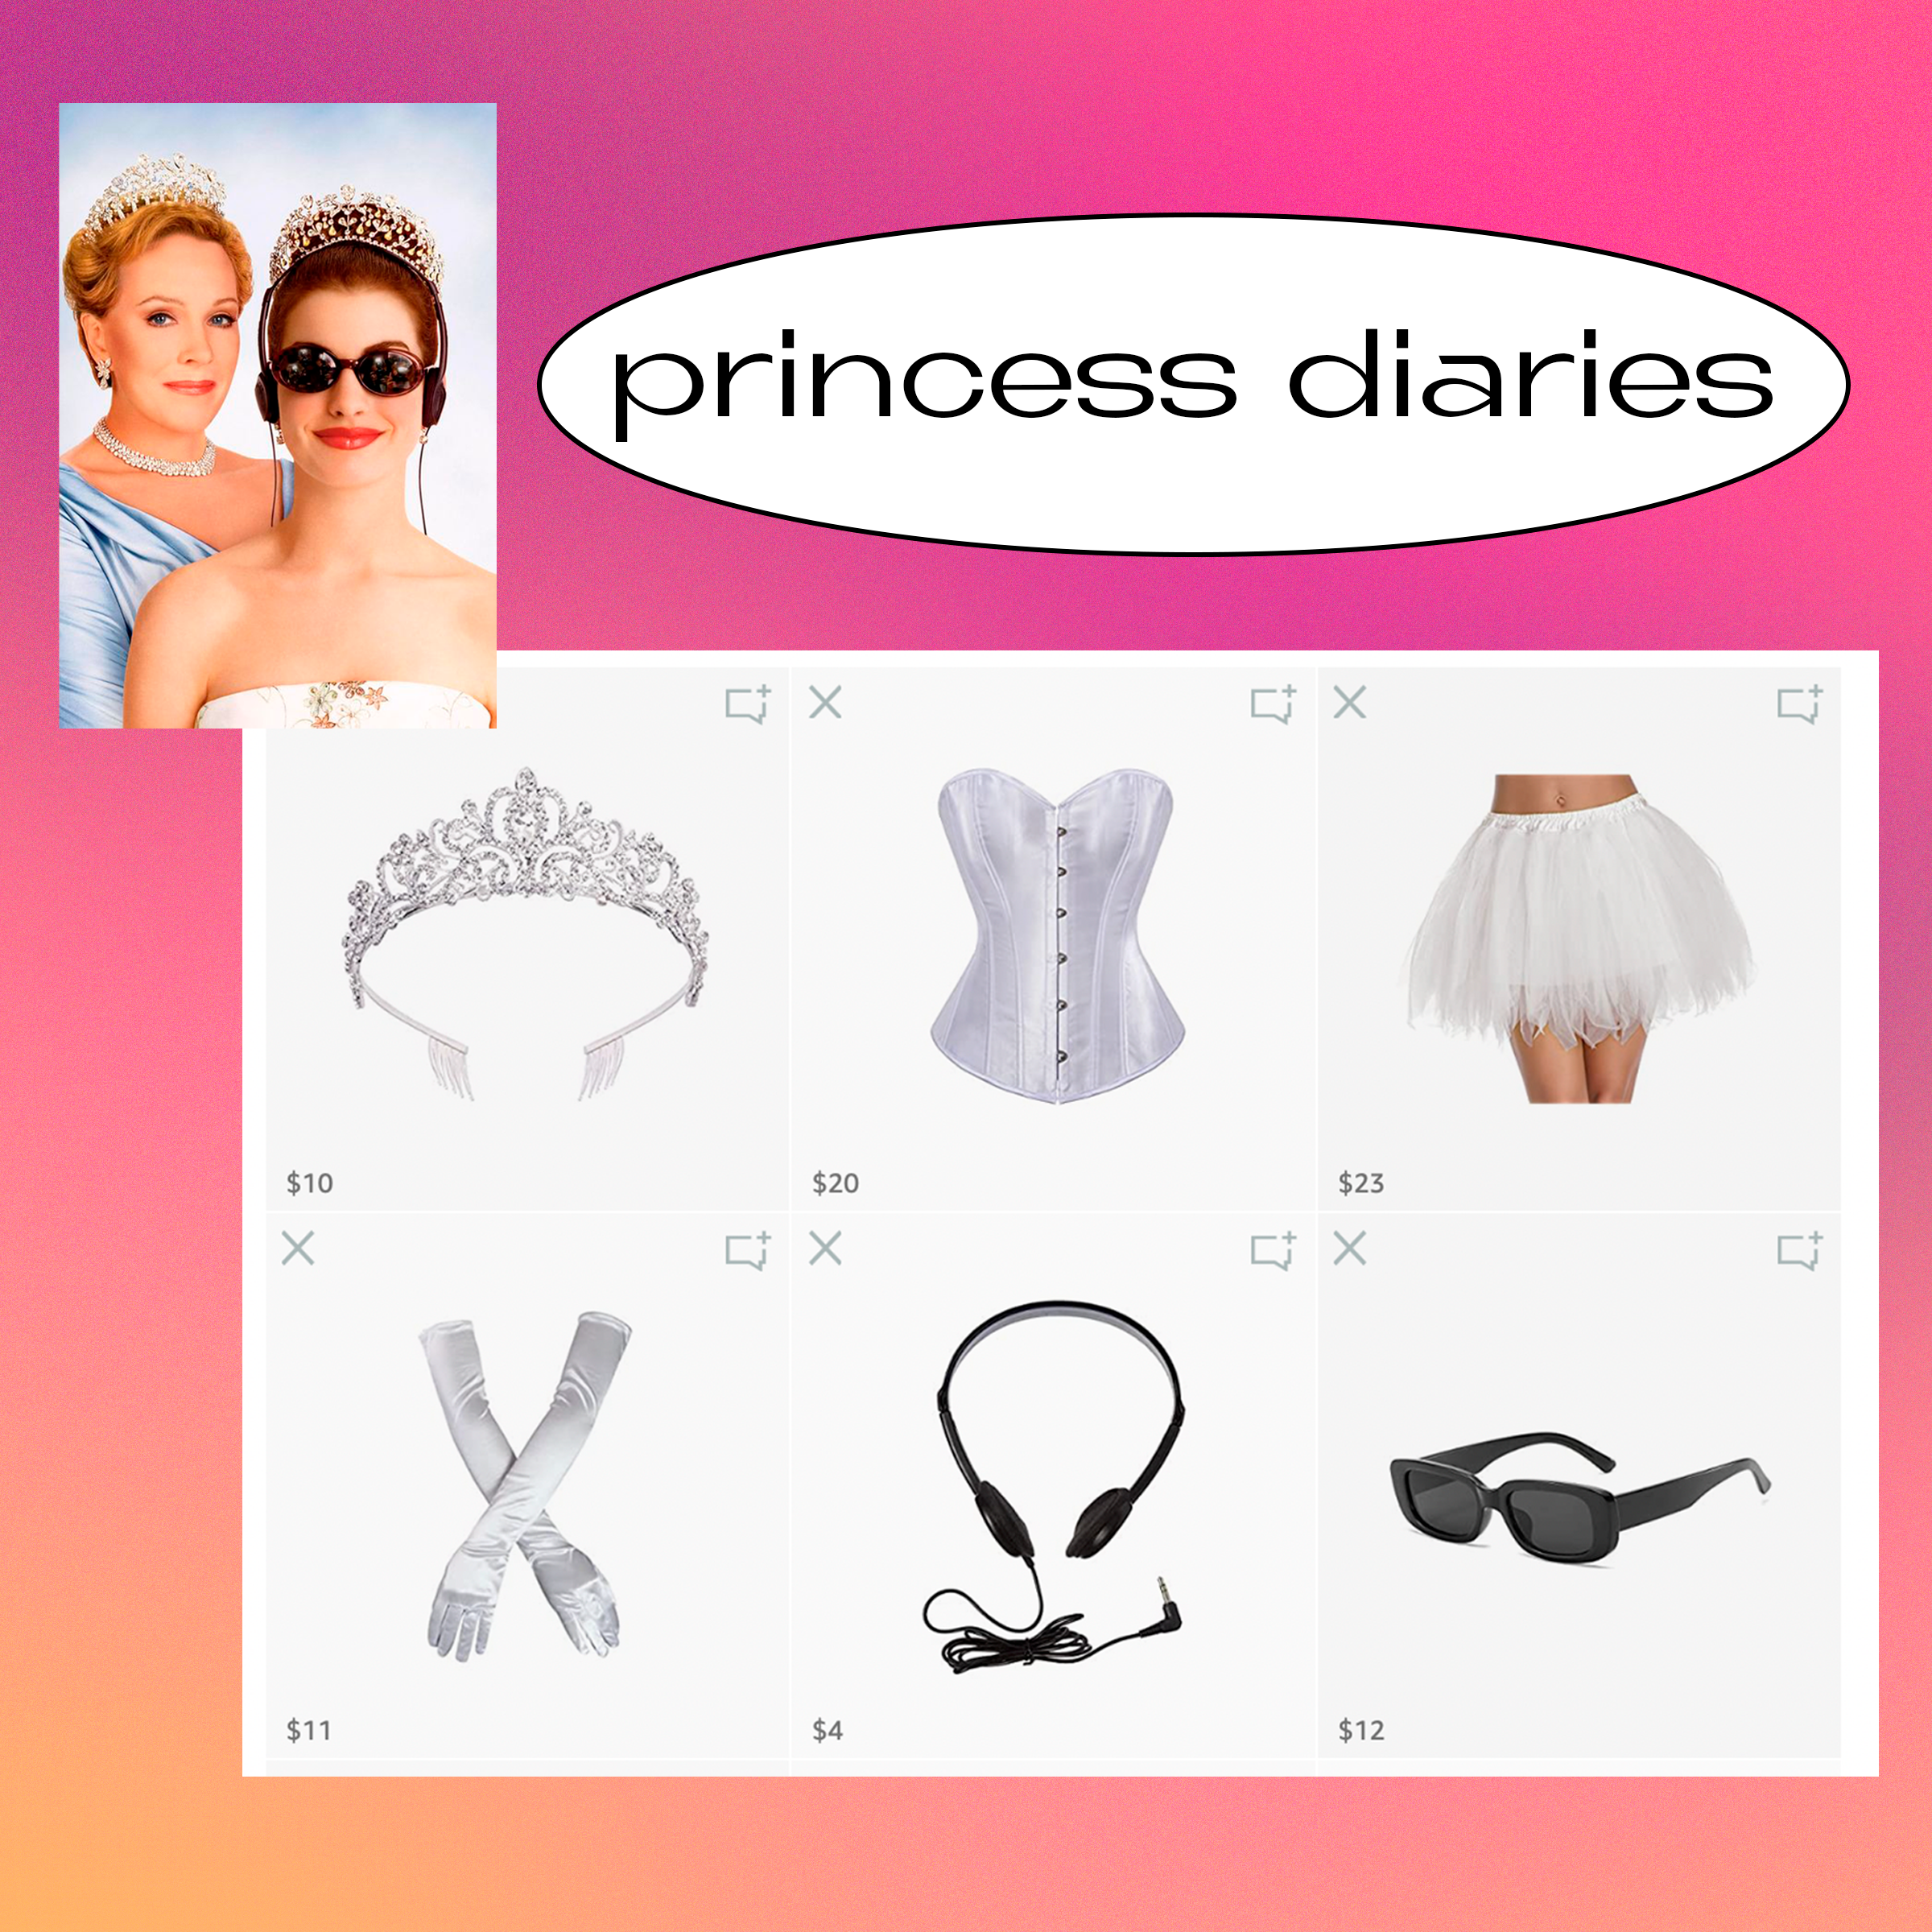 Princess Diaries (2001)